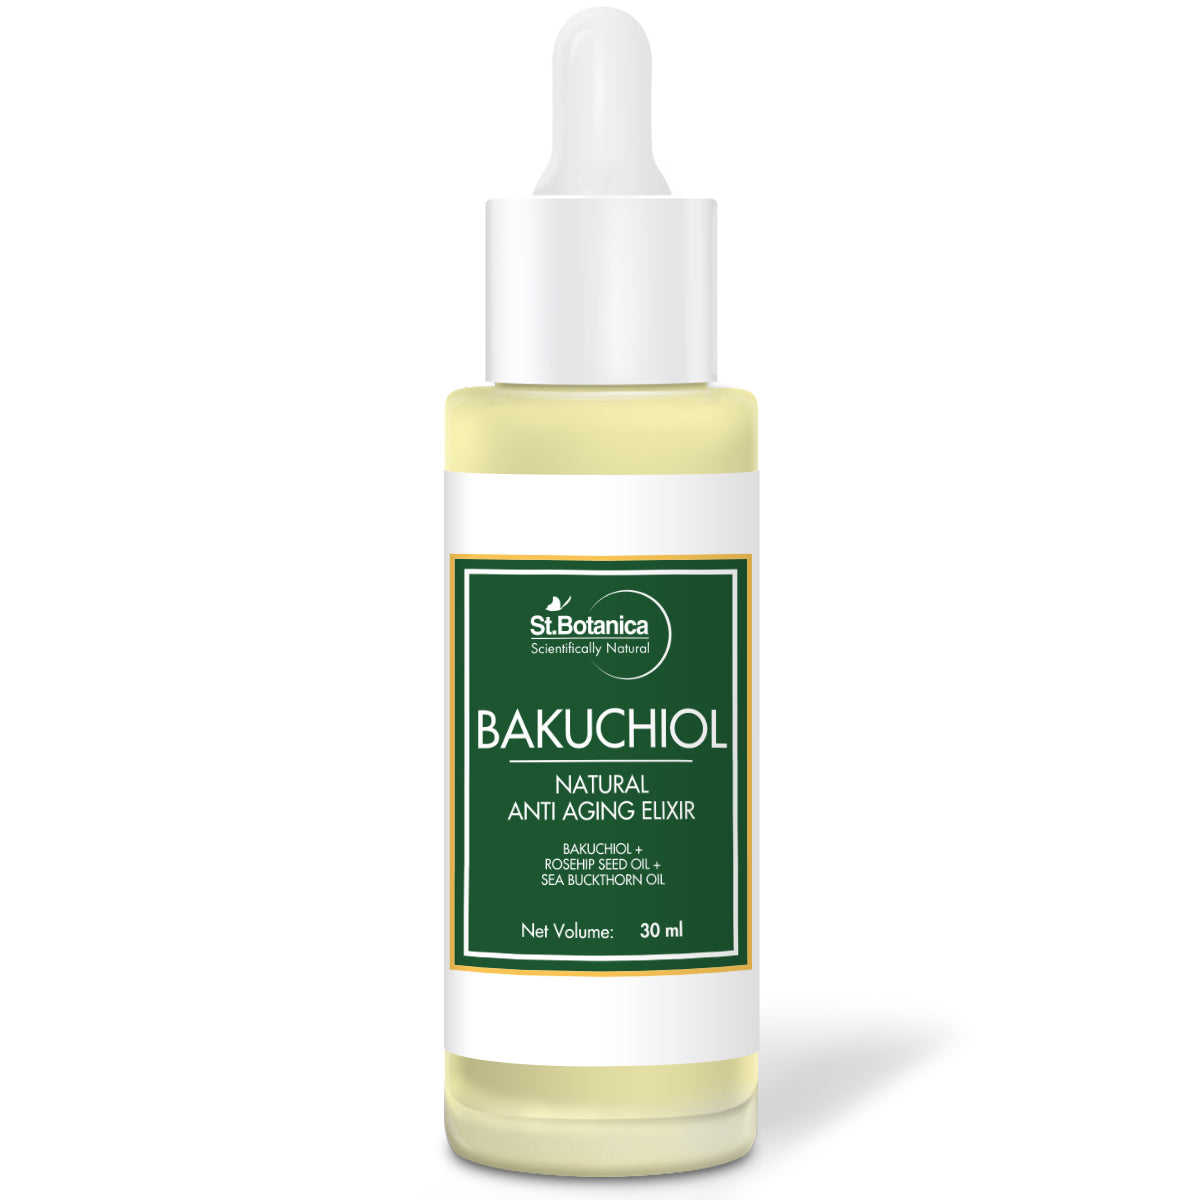 StBotania Bakuchiol Face Oil Natural Anti Aging Elixir With Rosehip Seed Oil, Sea Buckthorn Oil, Marula Oil, 30 ml